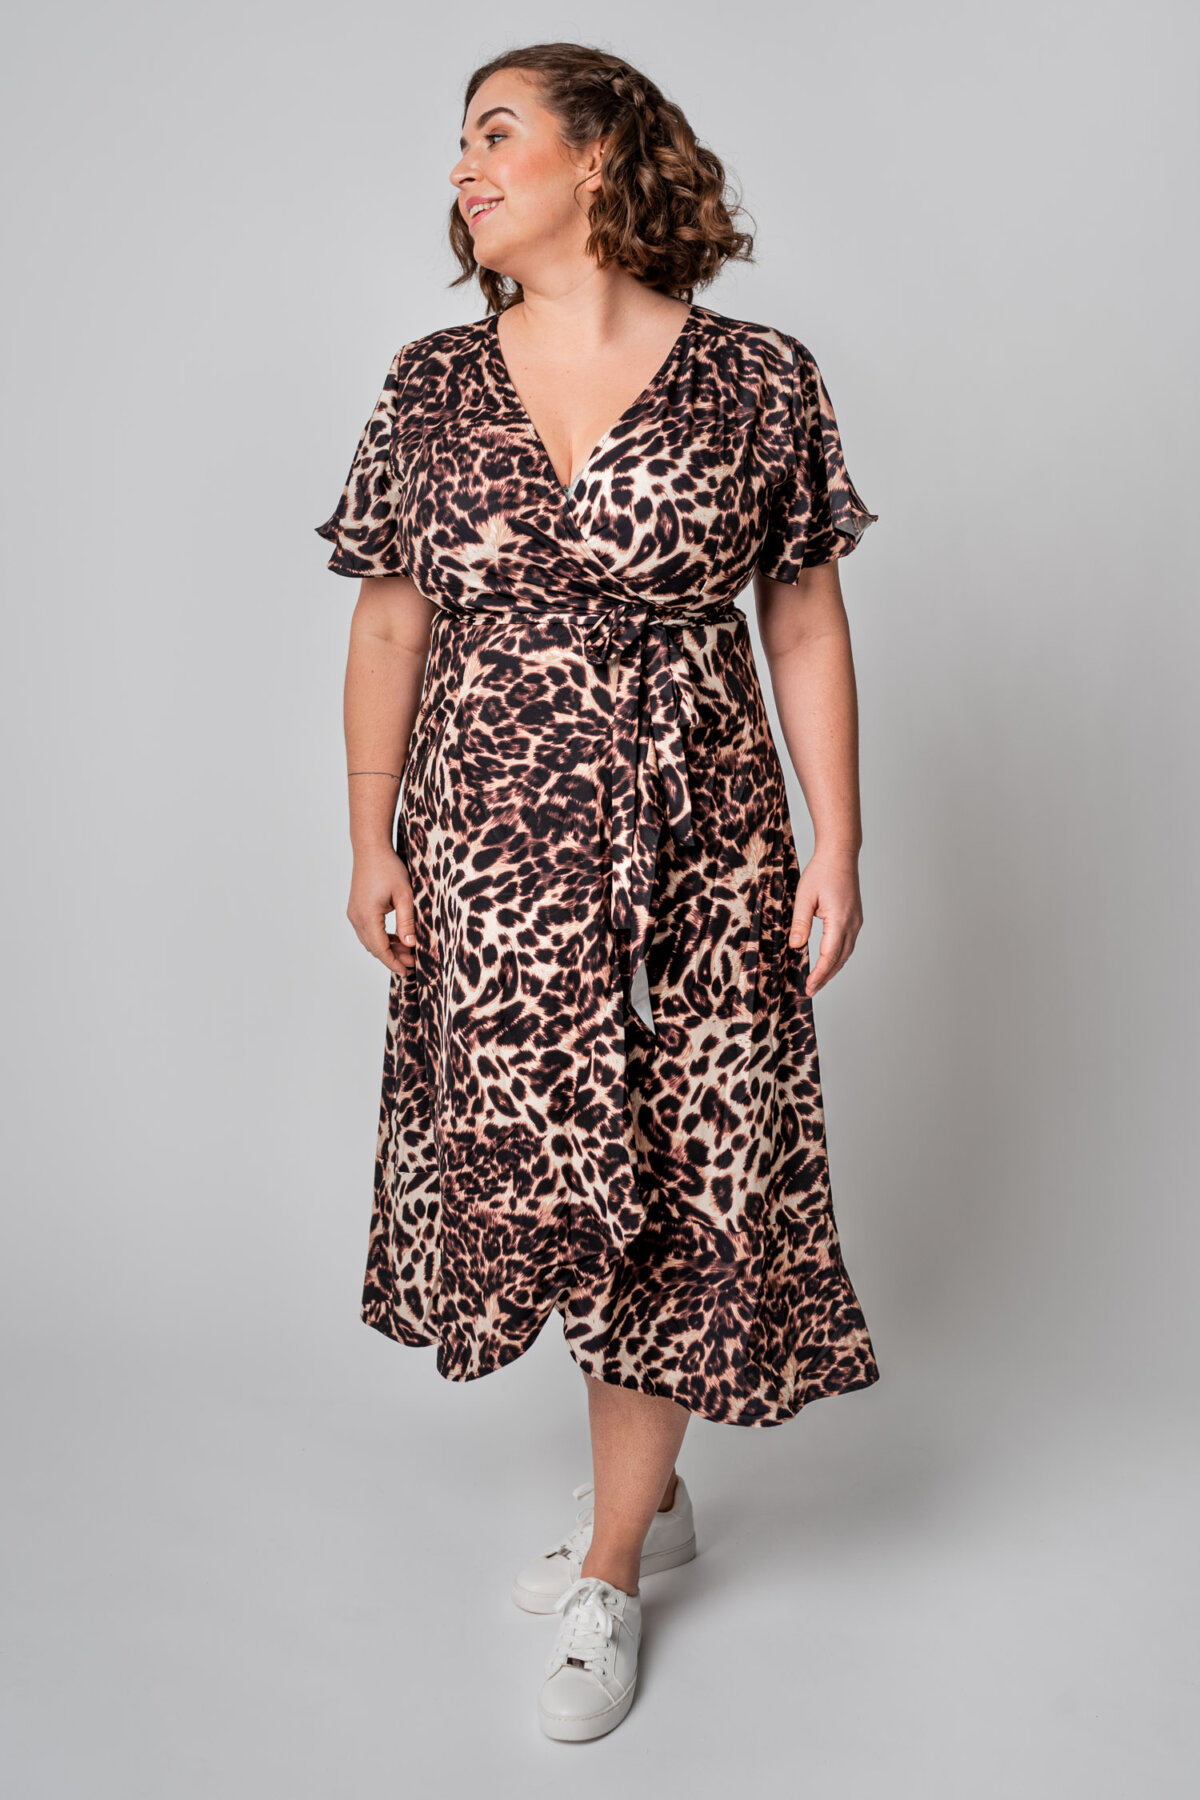 ting sovende entusiastisk Luftig slå-om kjole med leopard mønster - Nibu Copenhagen Denmark